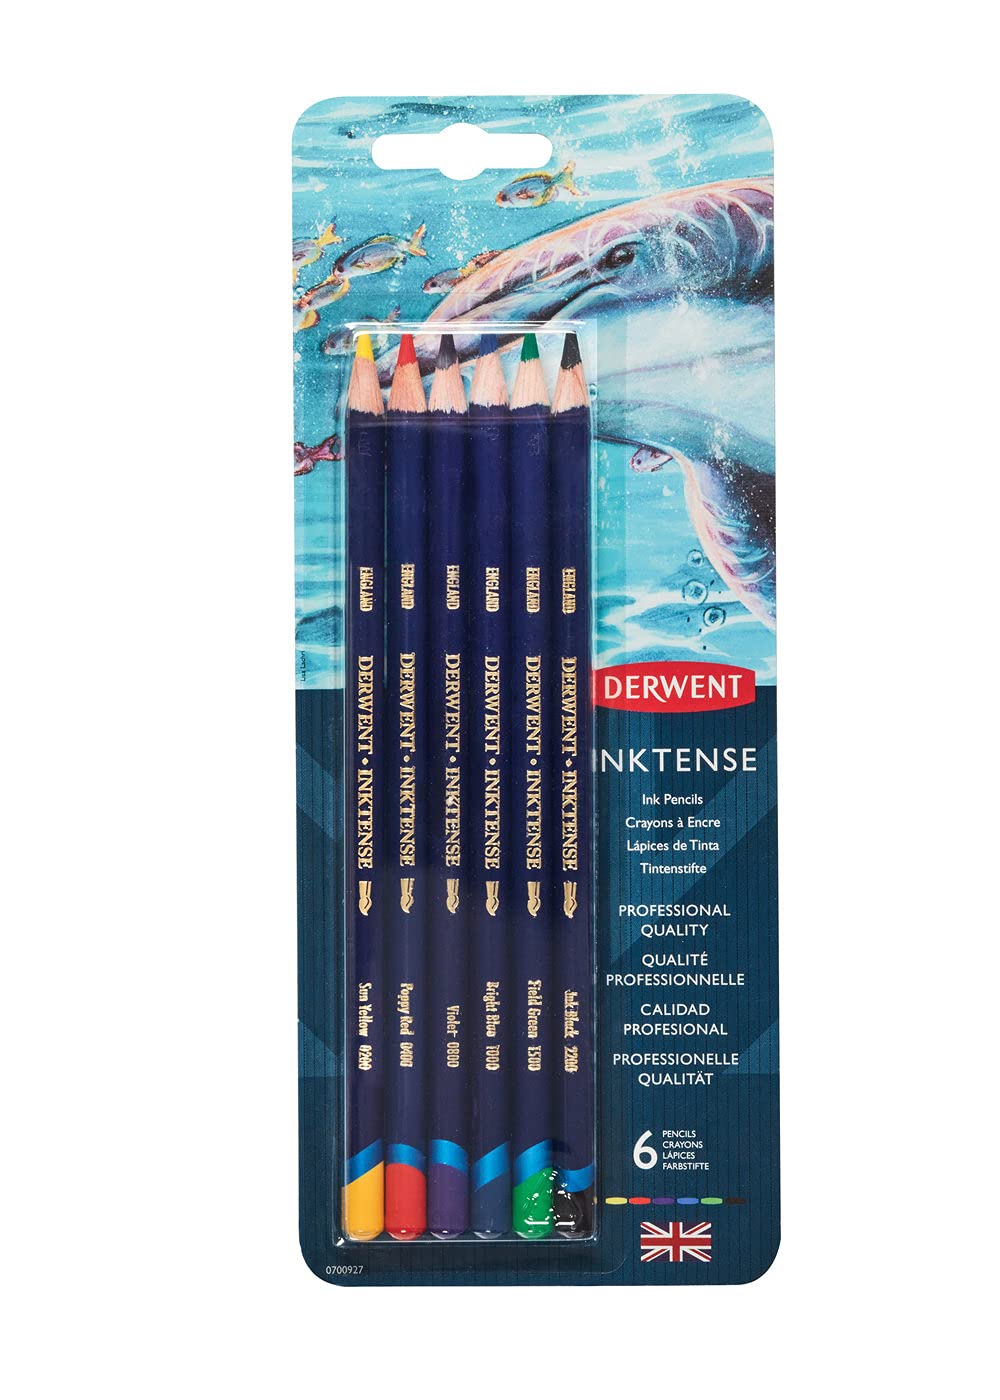 Derwent - Inktense Pencil set - Blister 6 Pack